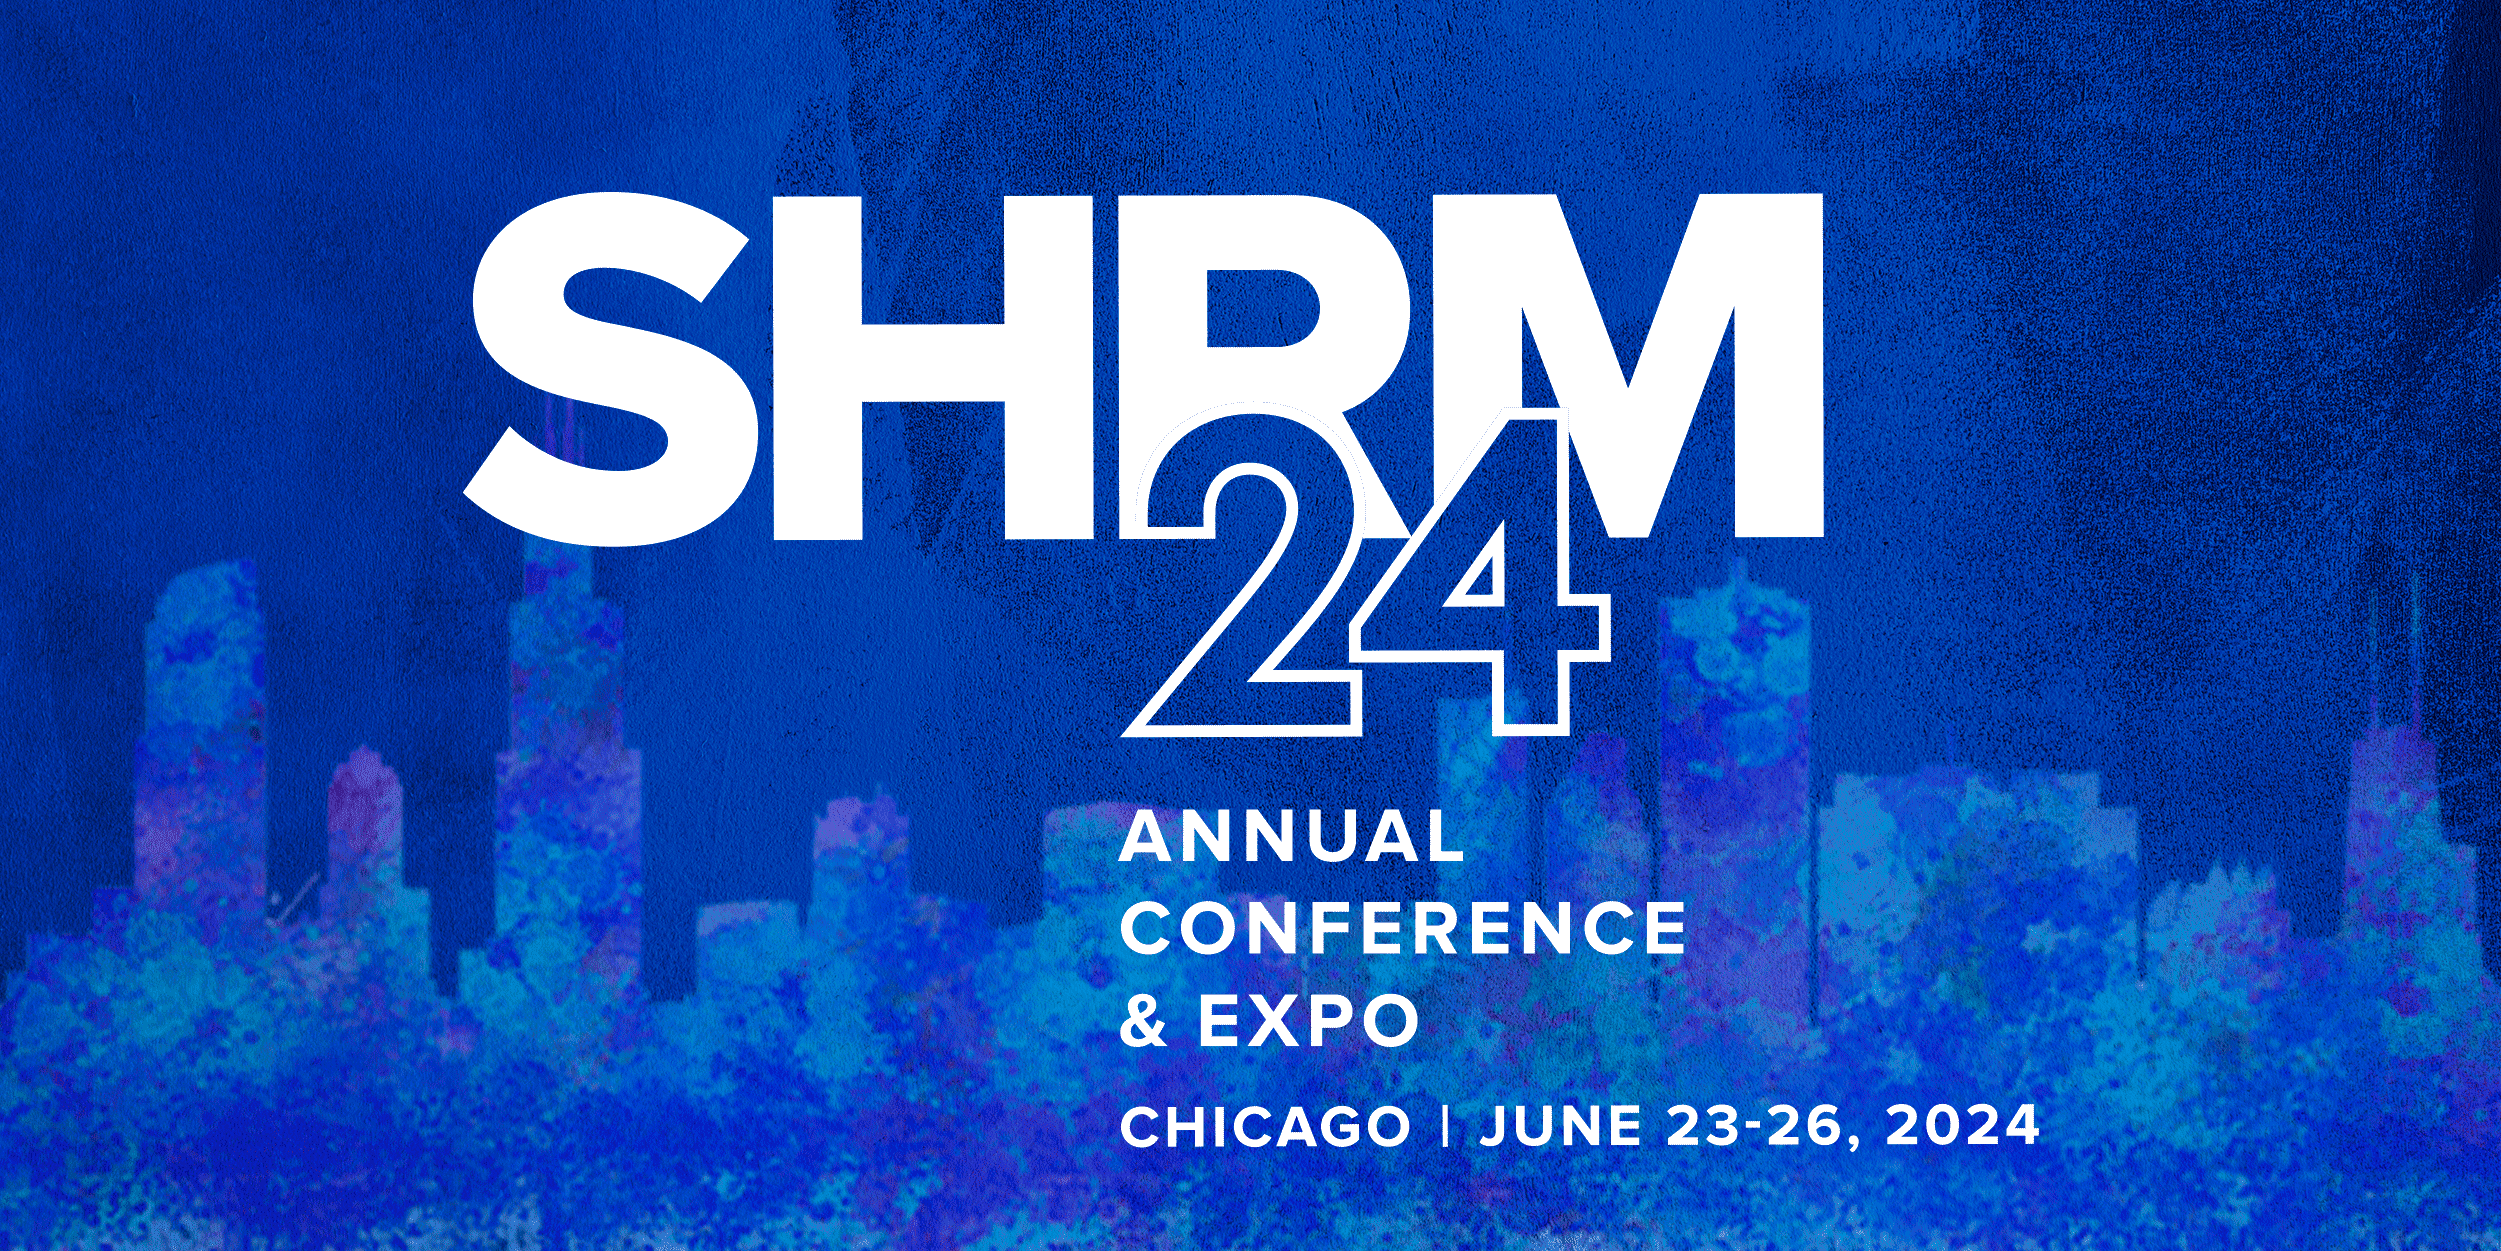 Sherri Shepherd Announced as a SHRM Annual Conference & Expo 2024 Main